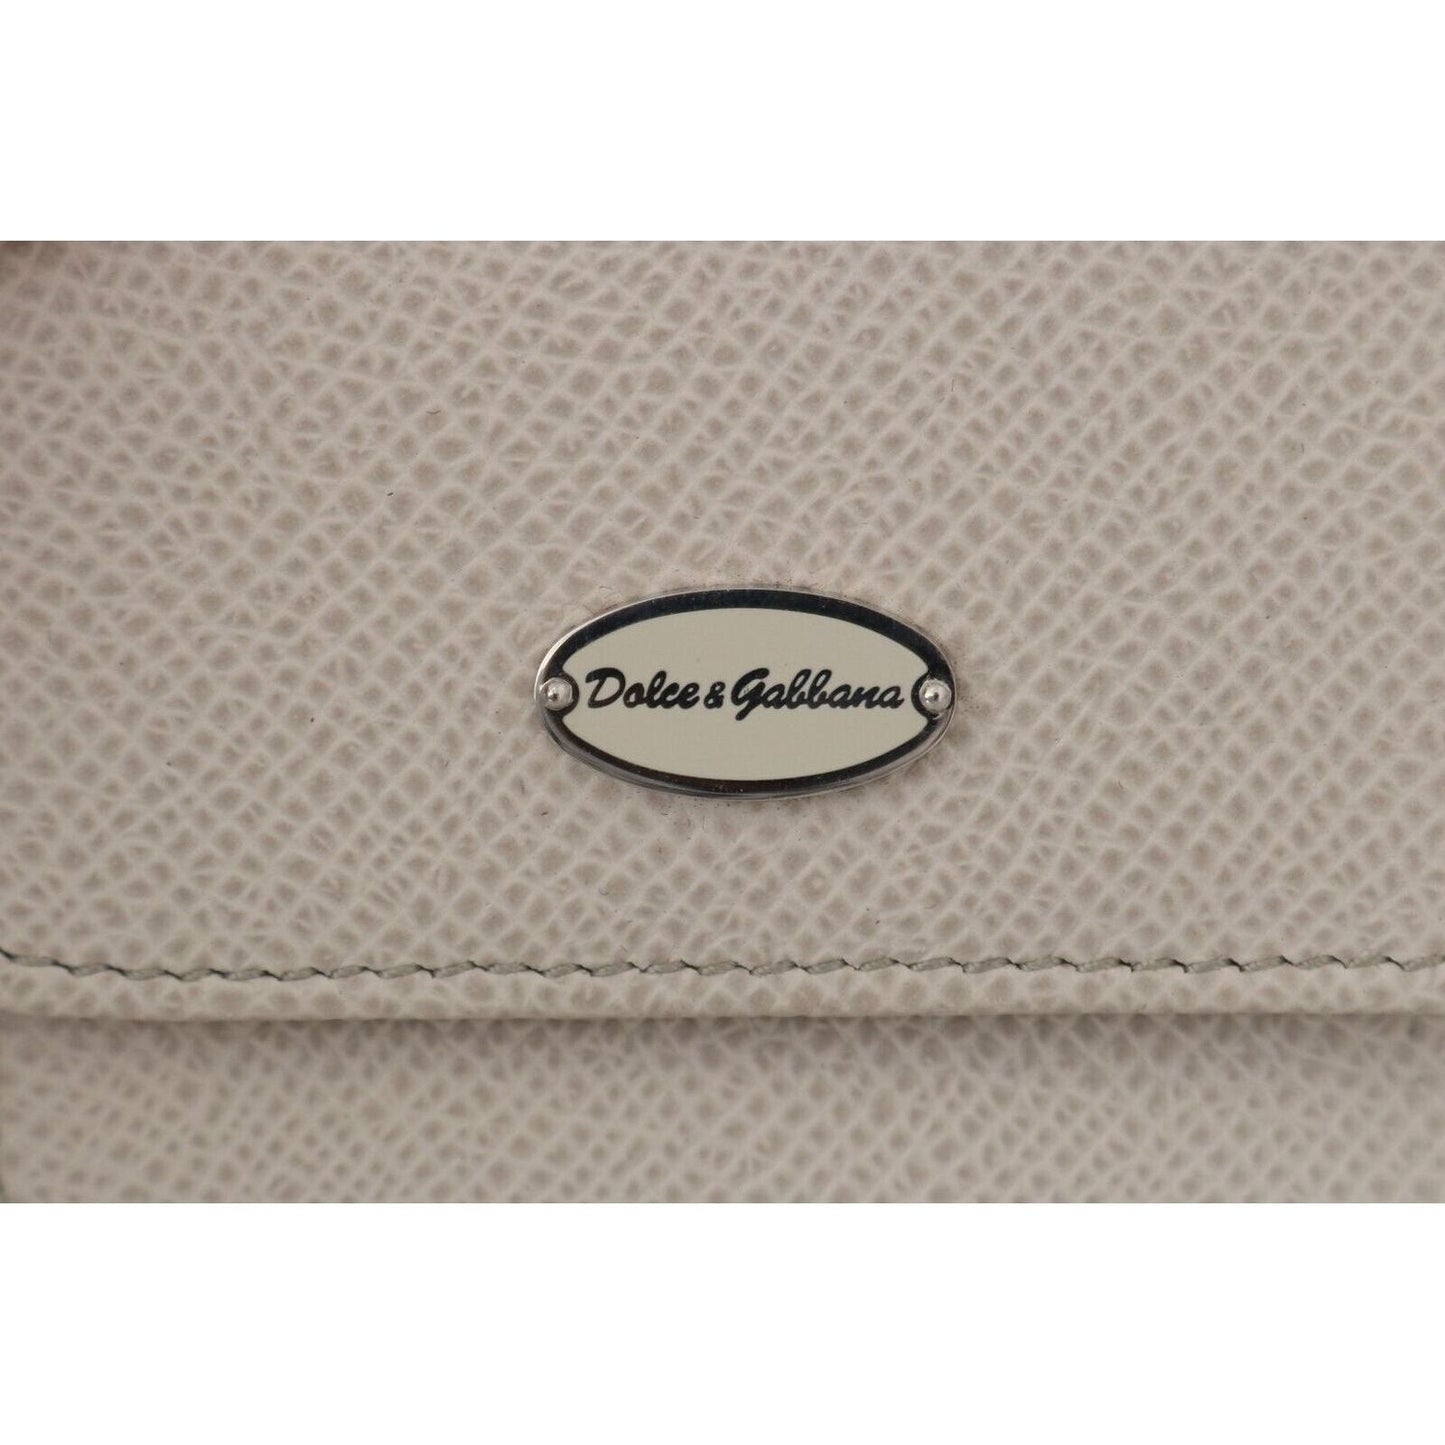 Dolce & Gabbana Chic White Leather Condom Case Wallet white-dauphine-leather-holder-pocket-wallet-condom-case